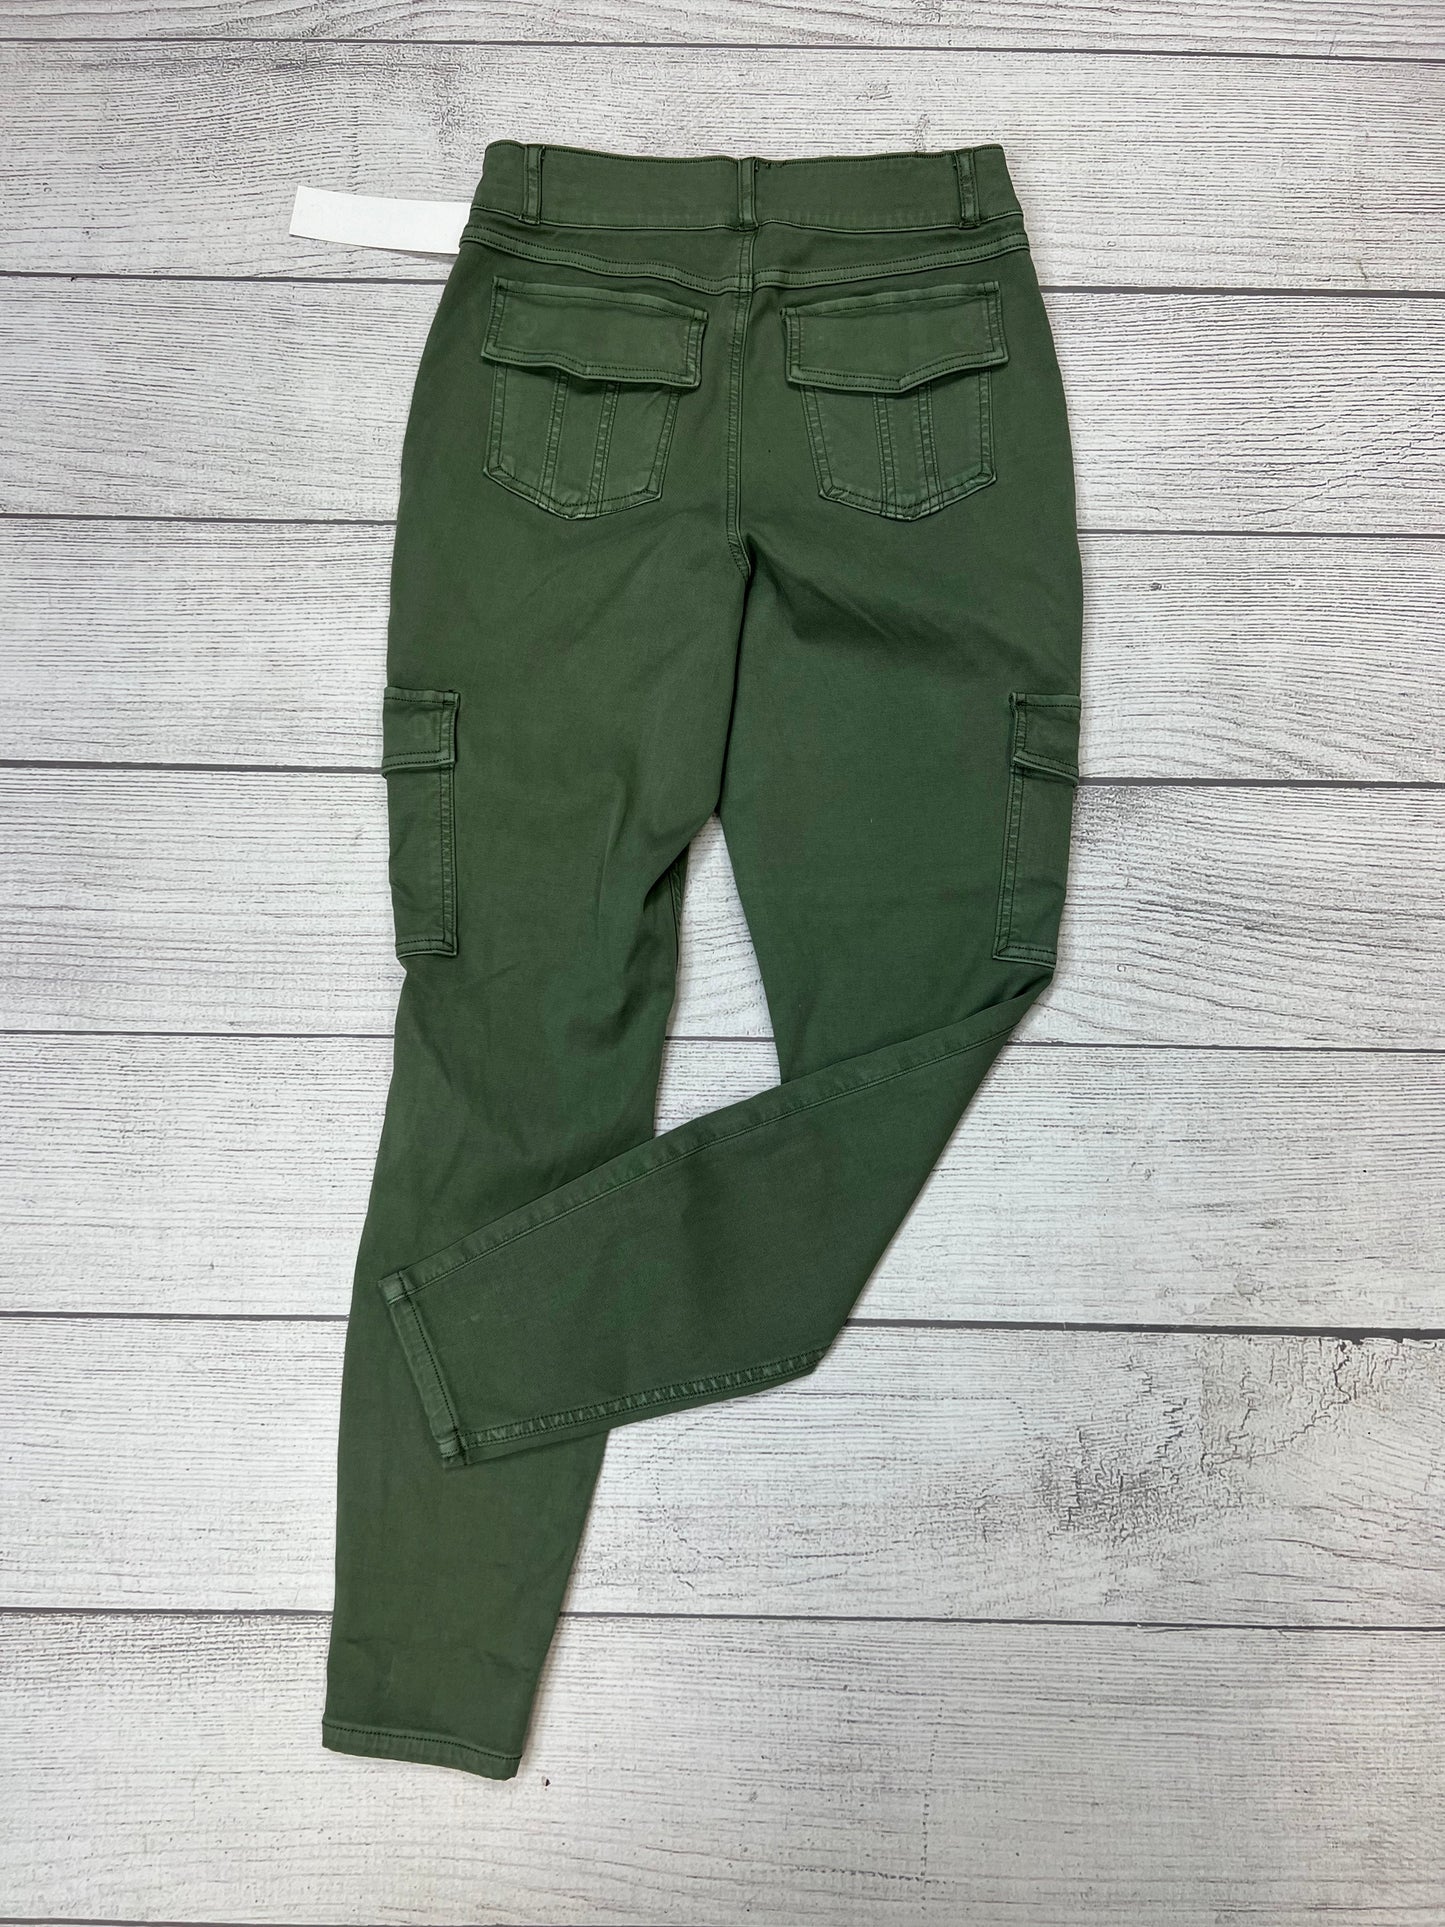 Green Pants Designer Spanx, Size L